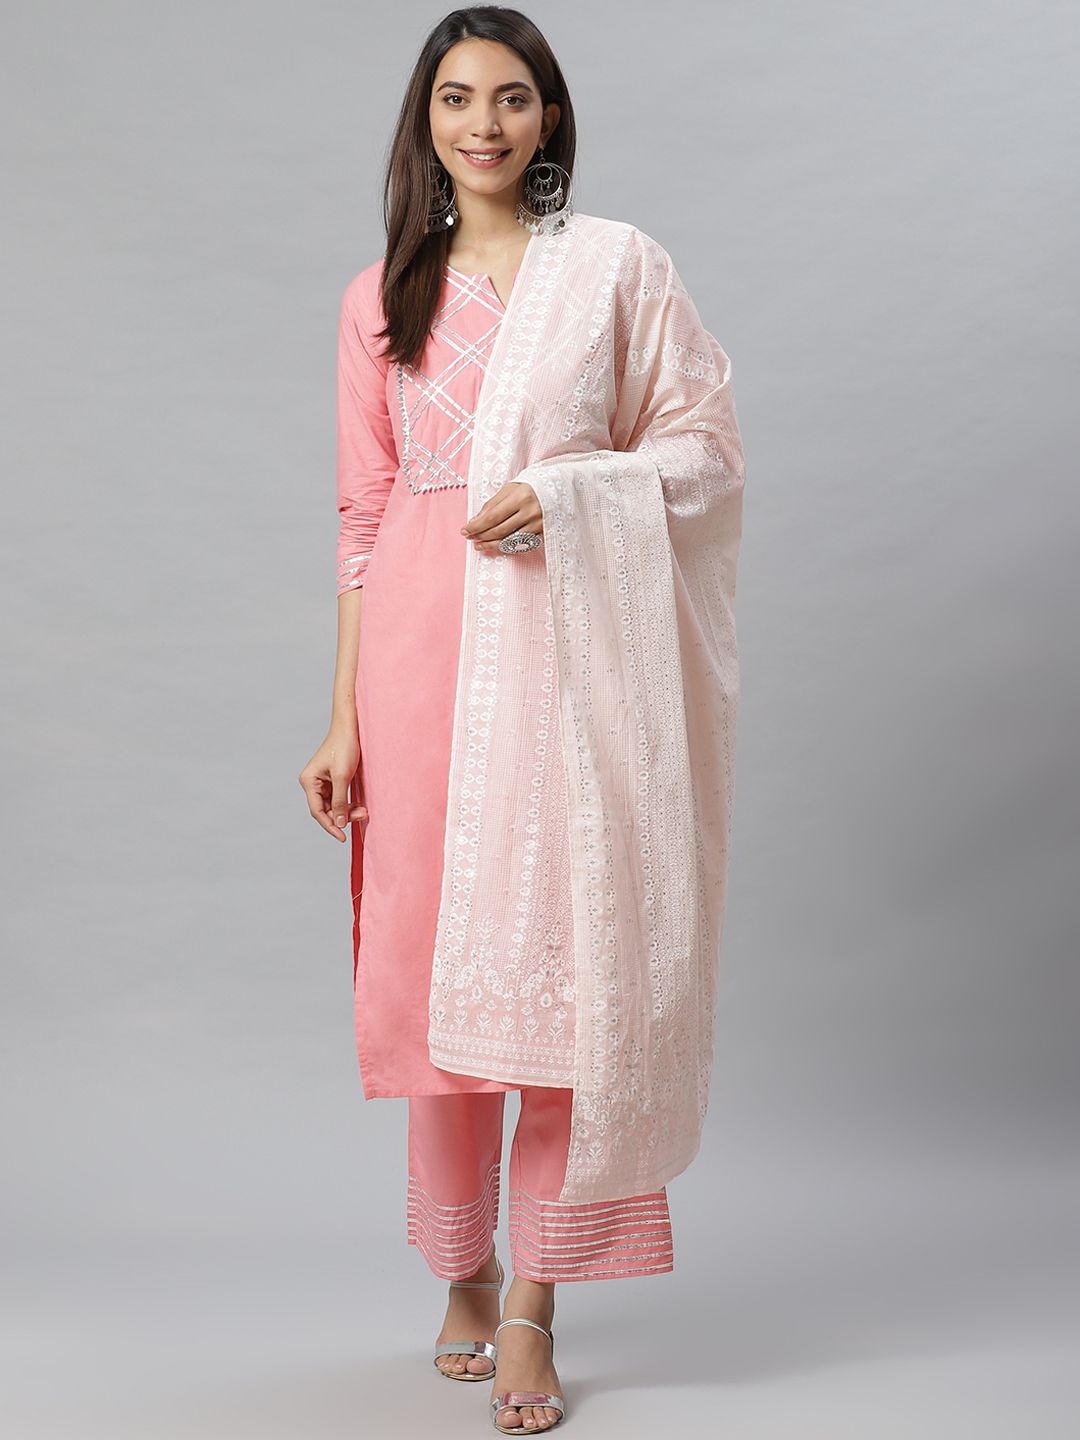 W Pink & Silver Printed Pure Cotton Dupatta Price in India